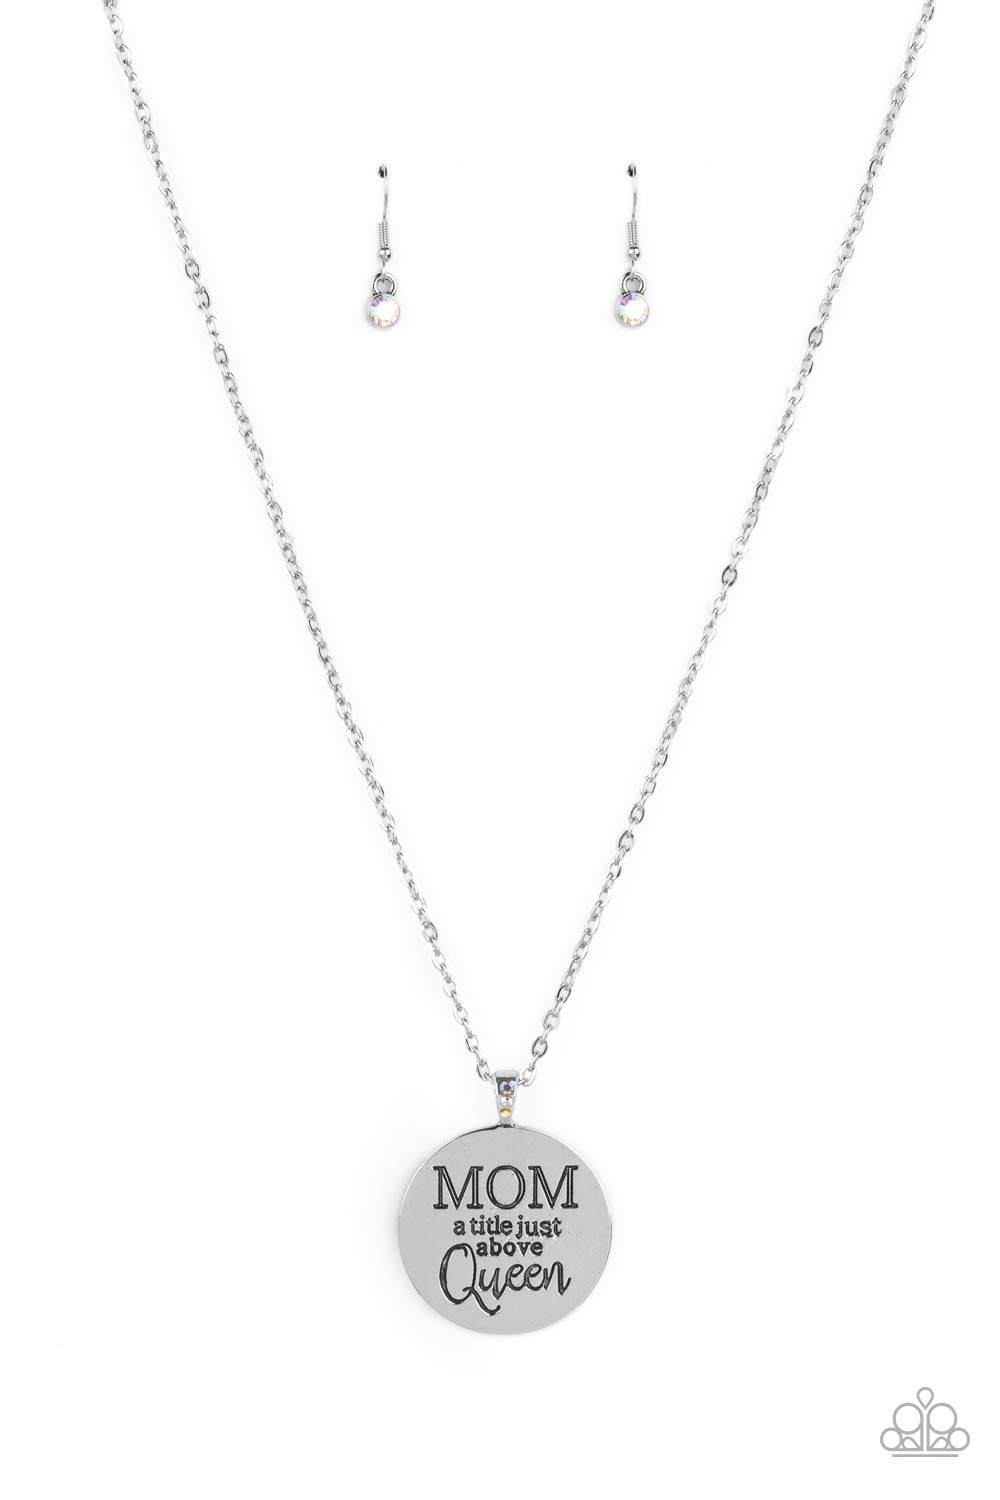 Mother Dear - Multi Necklace - Paparazzi - Dare2bdazzlin N Jewelry